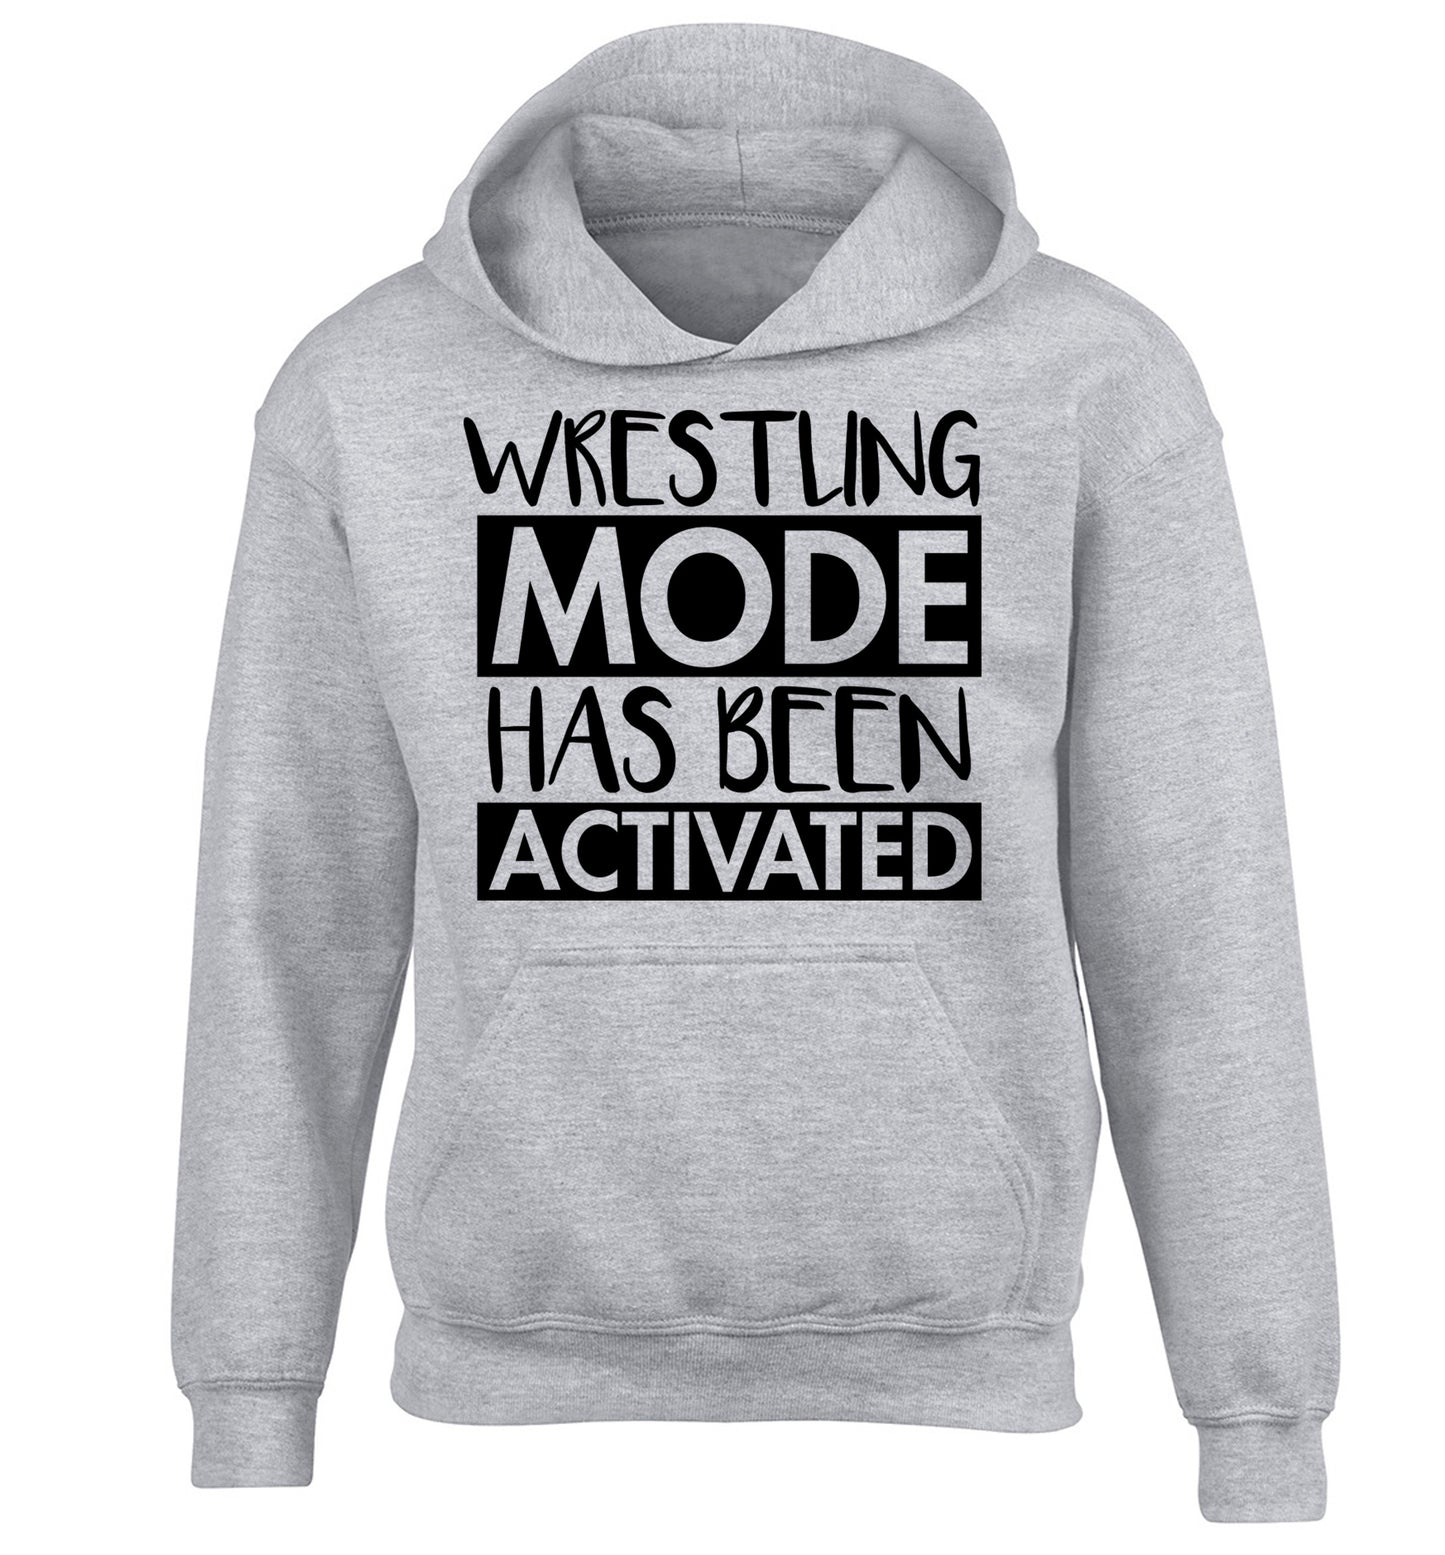 Wresting mode activated children's grey hoodie 12-14 Years